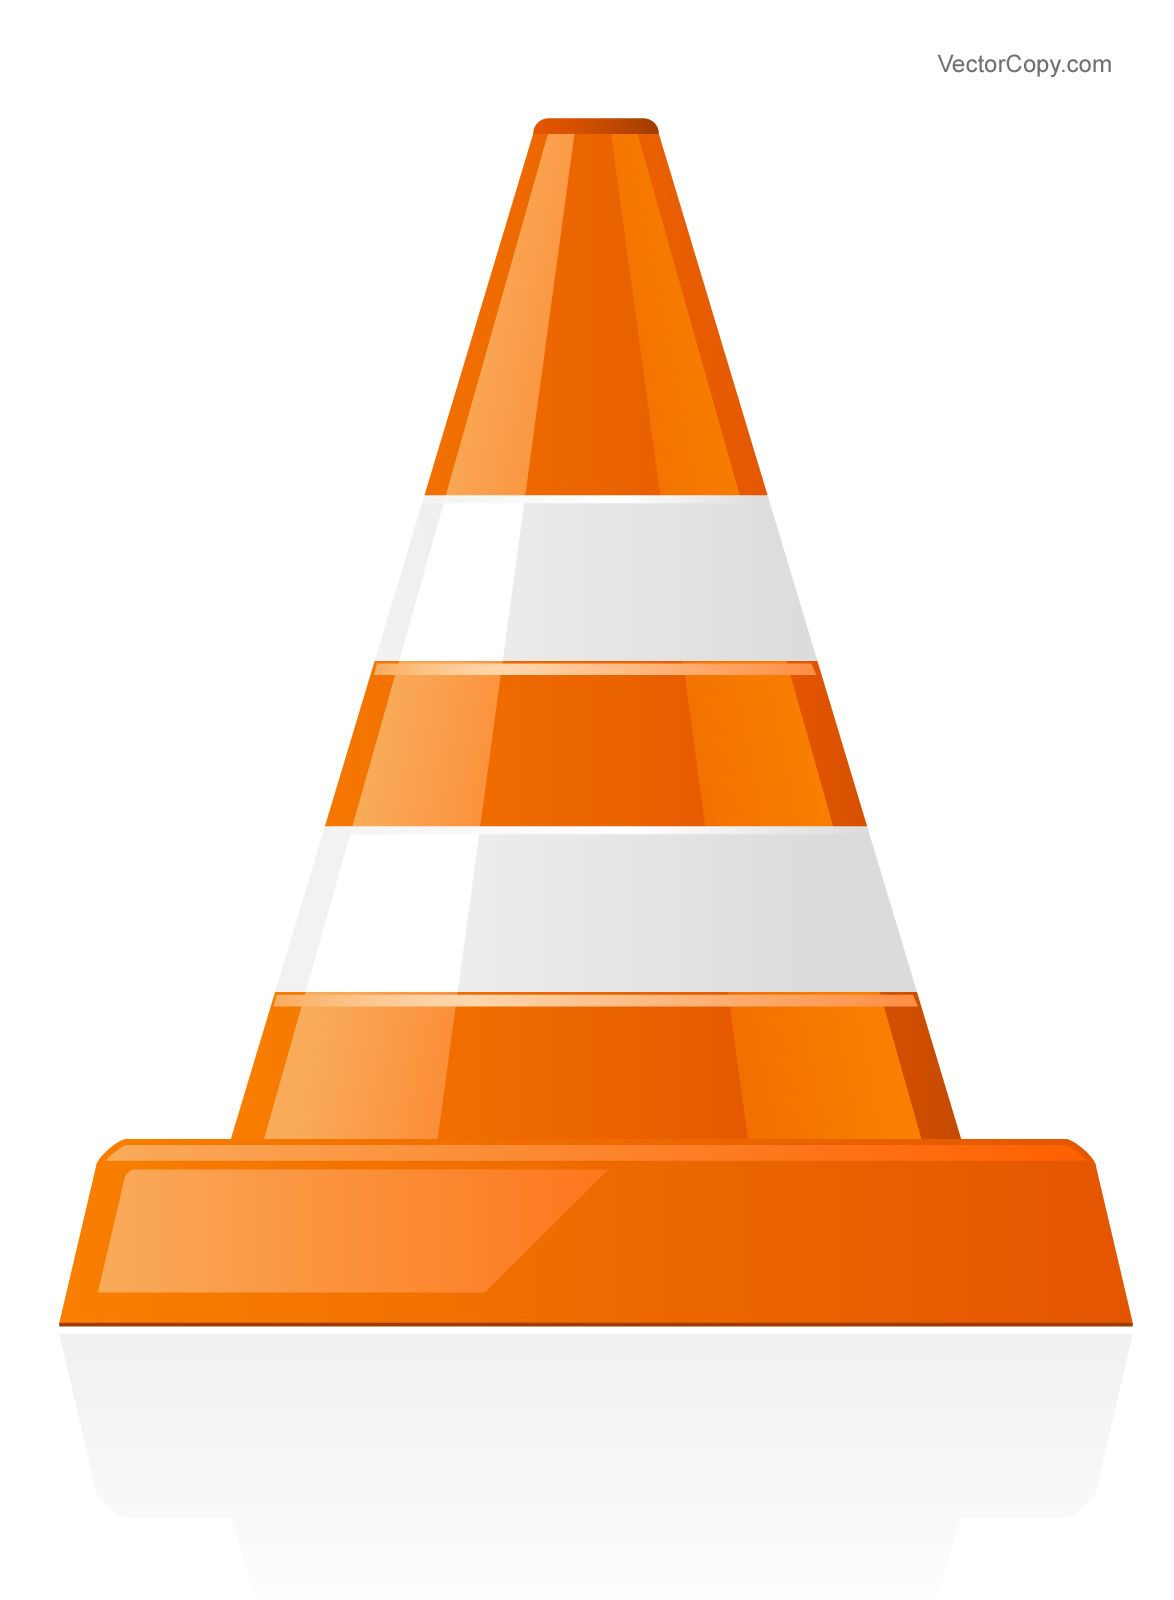 Traffic cone icon, free vector in 2019.